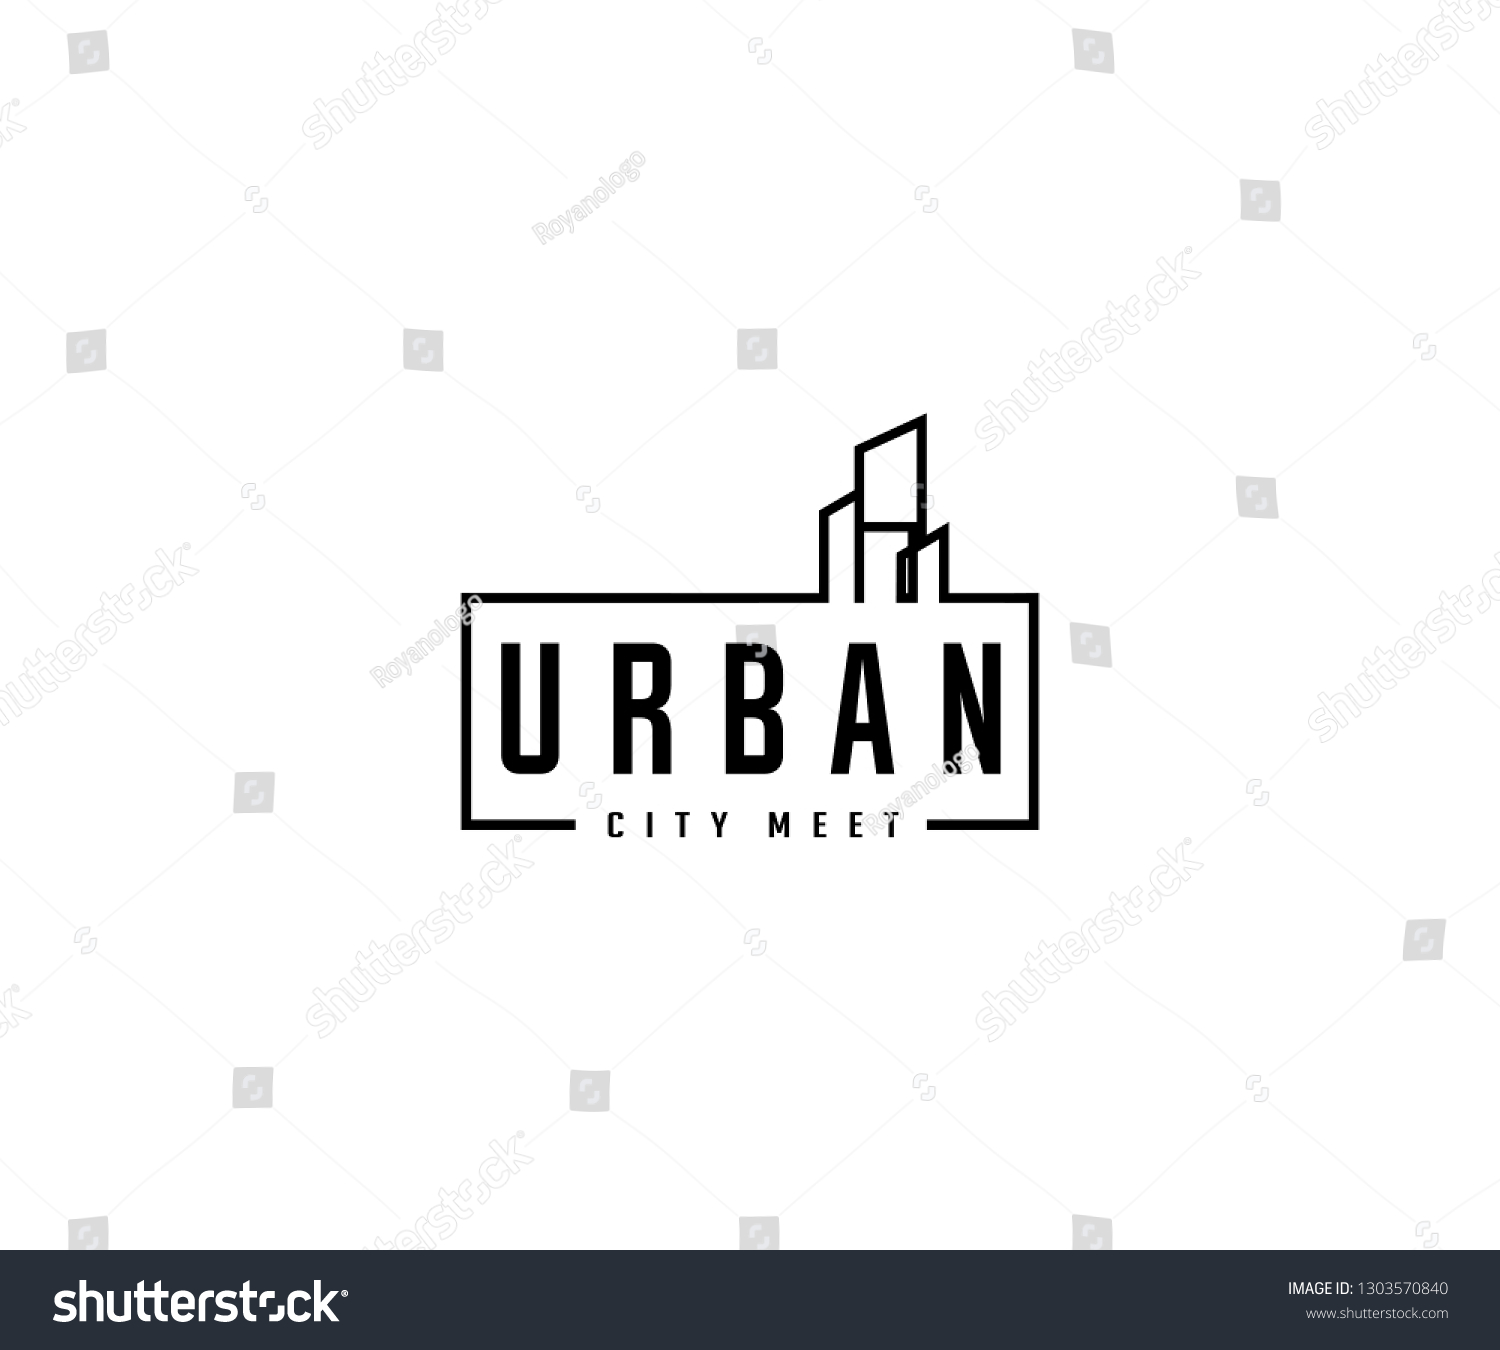 urban city meet logo template - Royalty Free Stock Vector 1303570840 ...